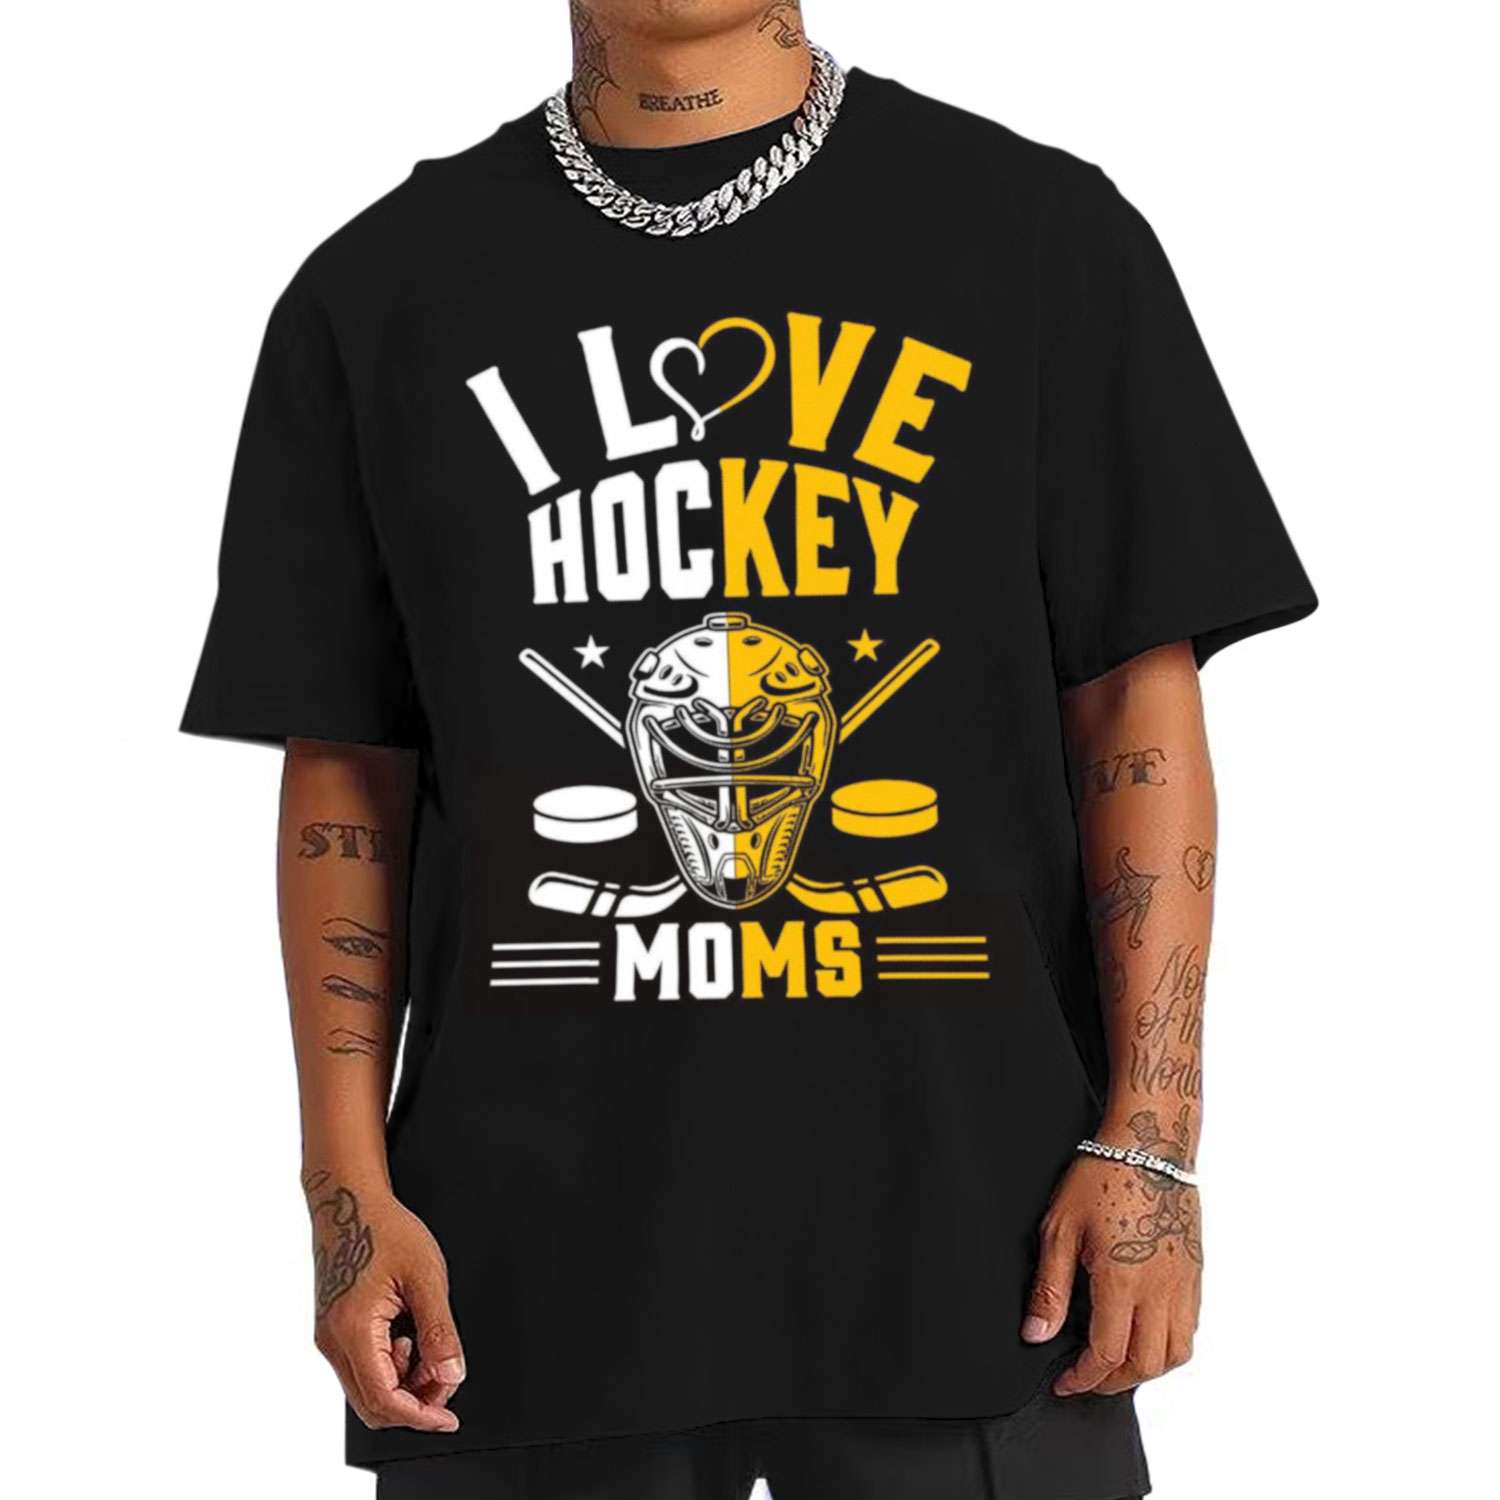 I Love Hockey Moms T-shirt